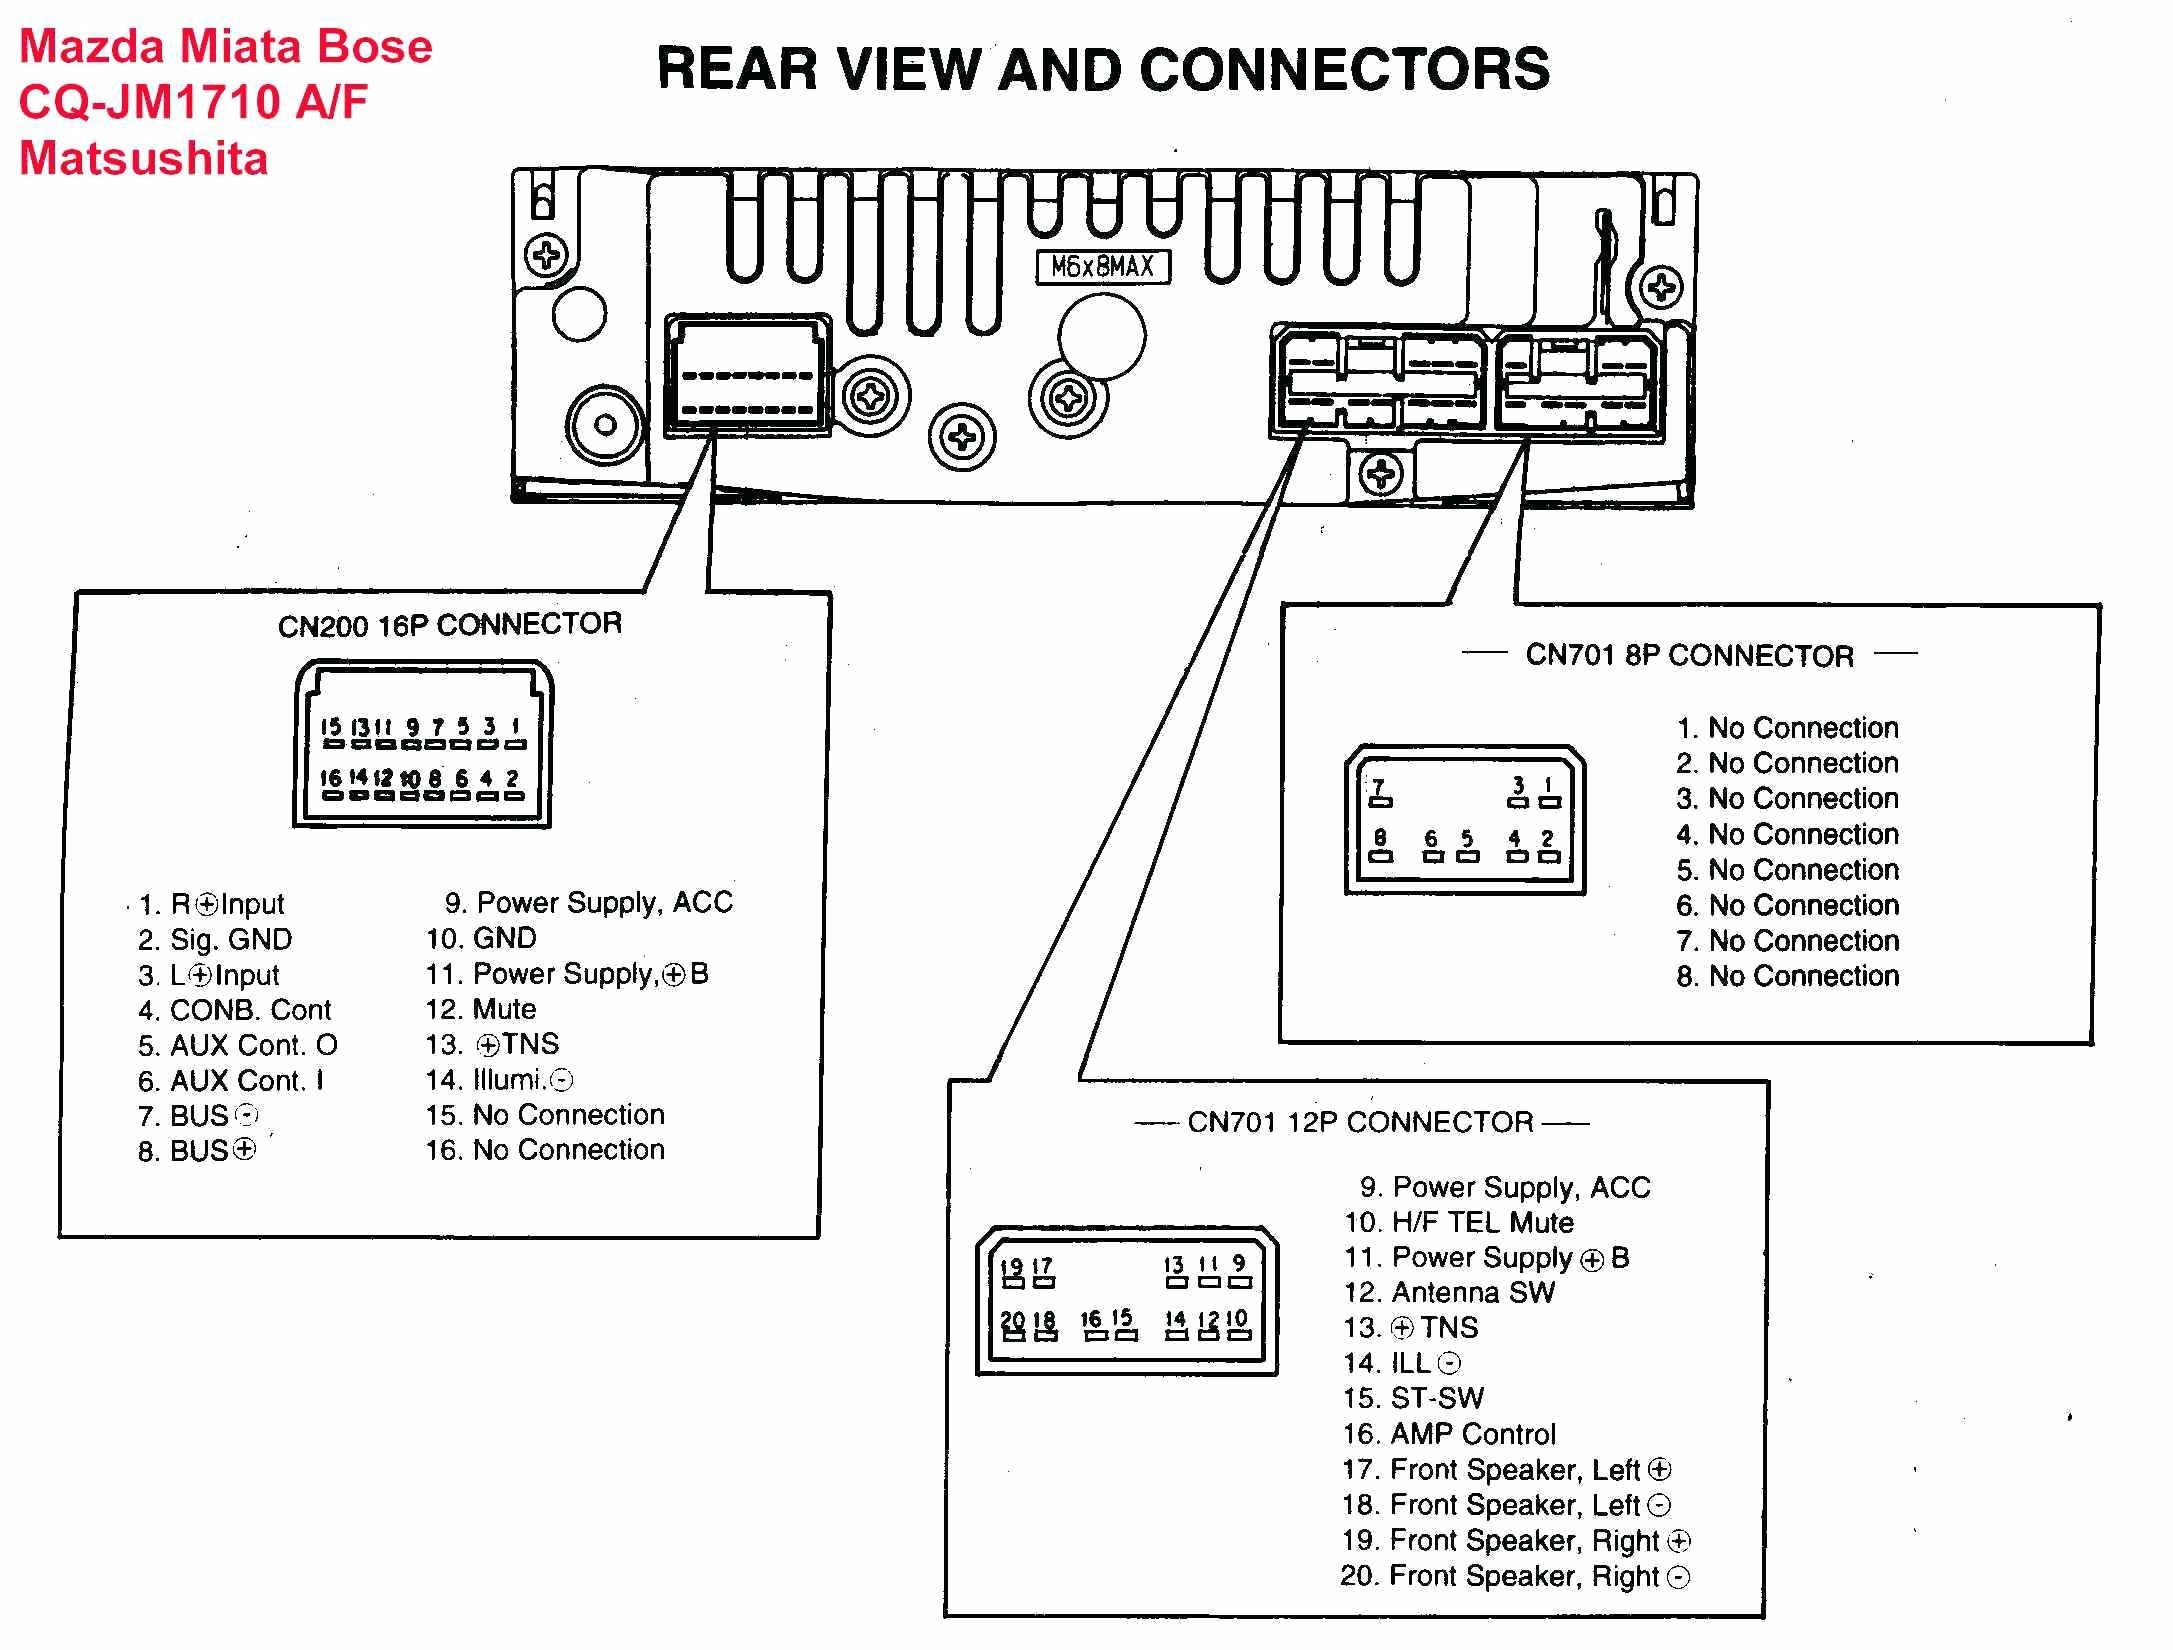 Sony Car Radio Wiring Diagram sony Stereo Wiring Diagram Wiring Diagram Datasource Of Sony Car Radio Wiring Diagram